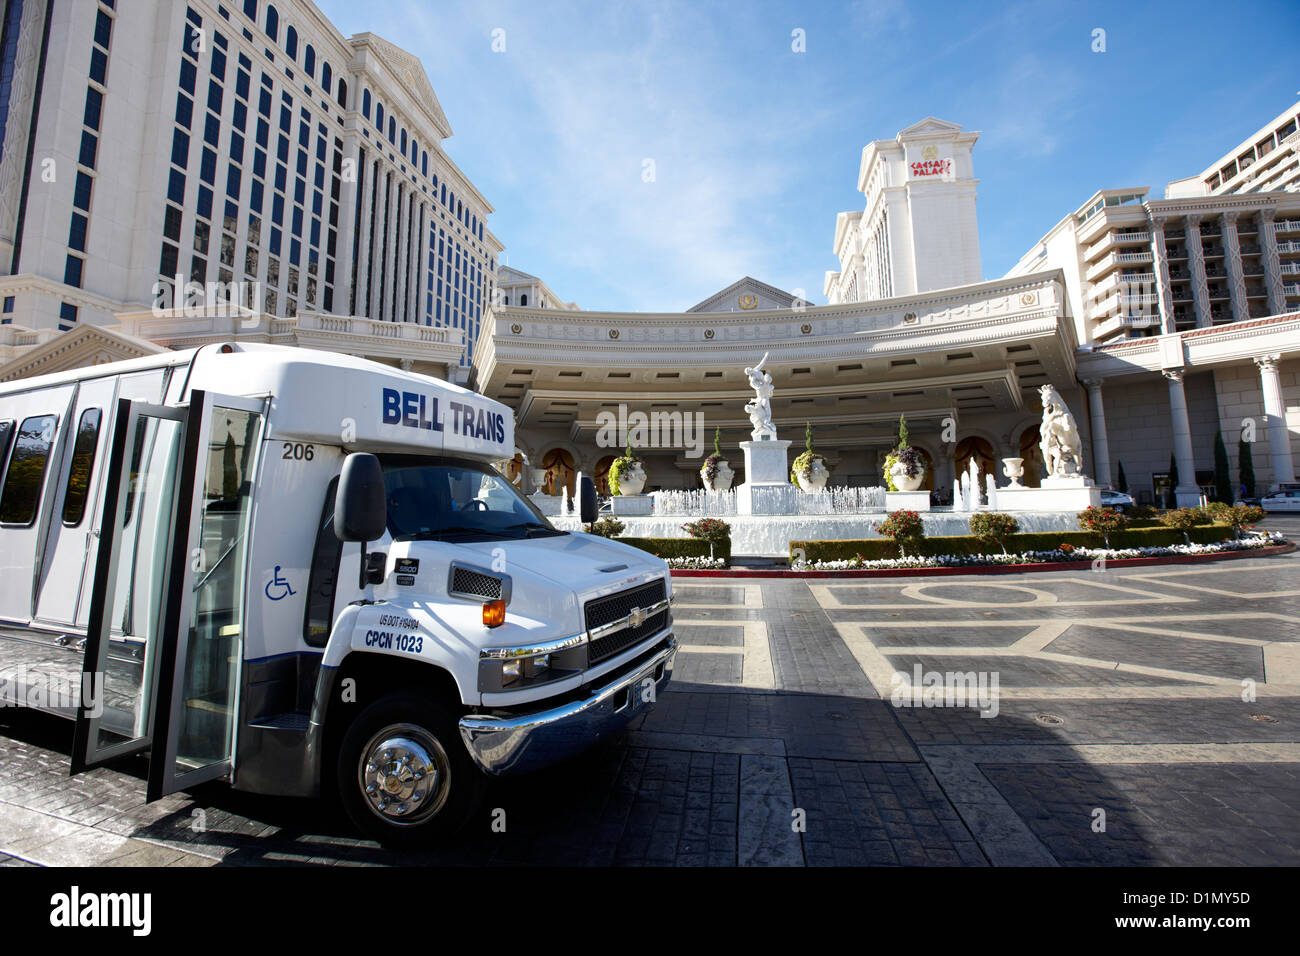 bell trans airport shuttle bus outside caesars palace luxury hotel and  casino Las Vegas Nevada USA Stock Photo - Alamy